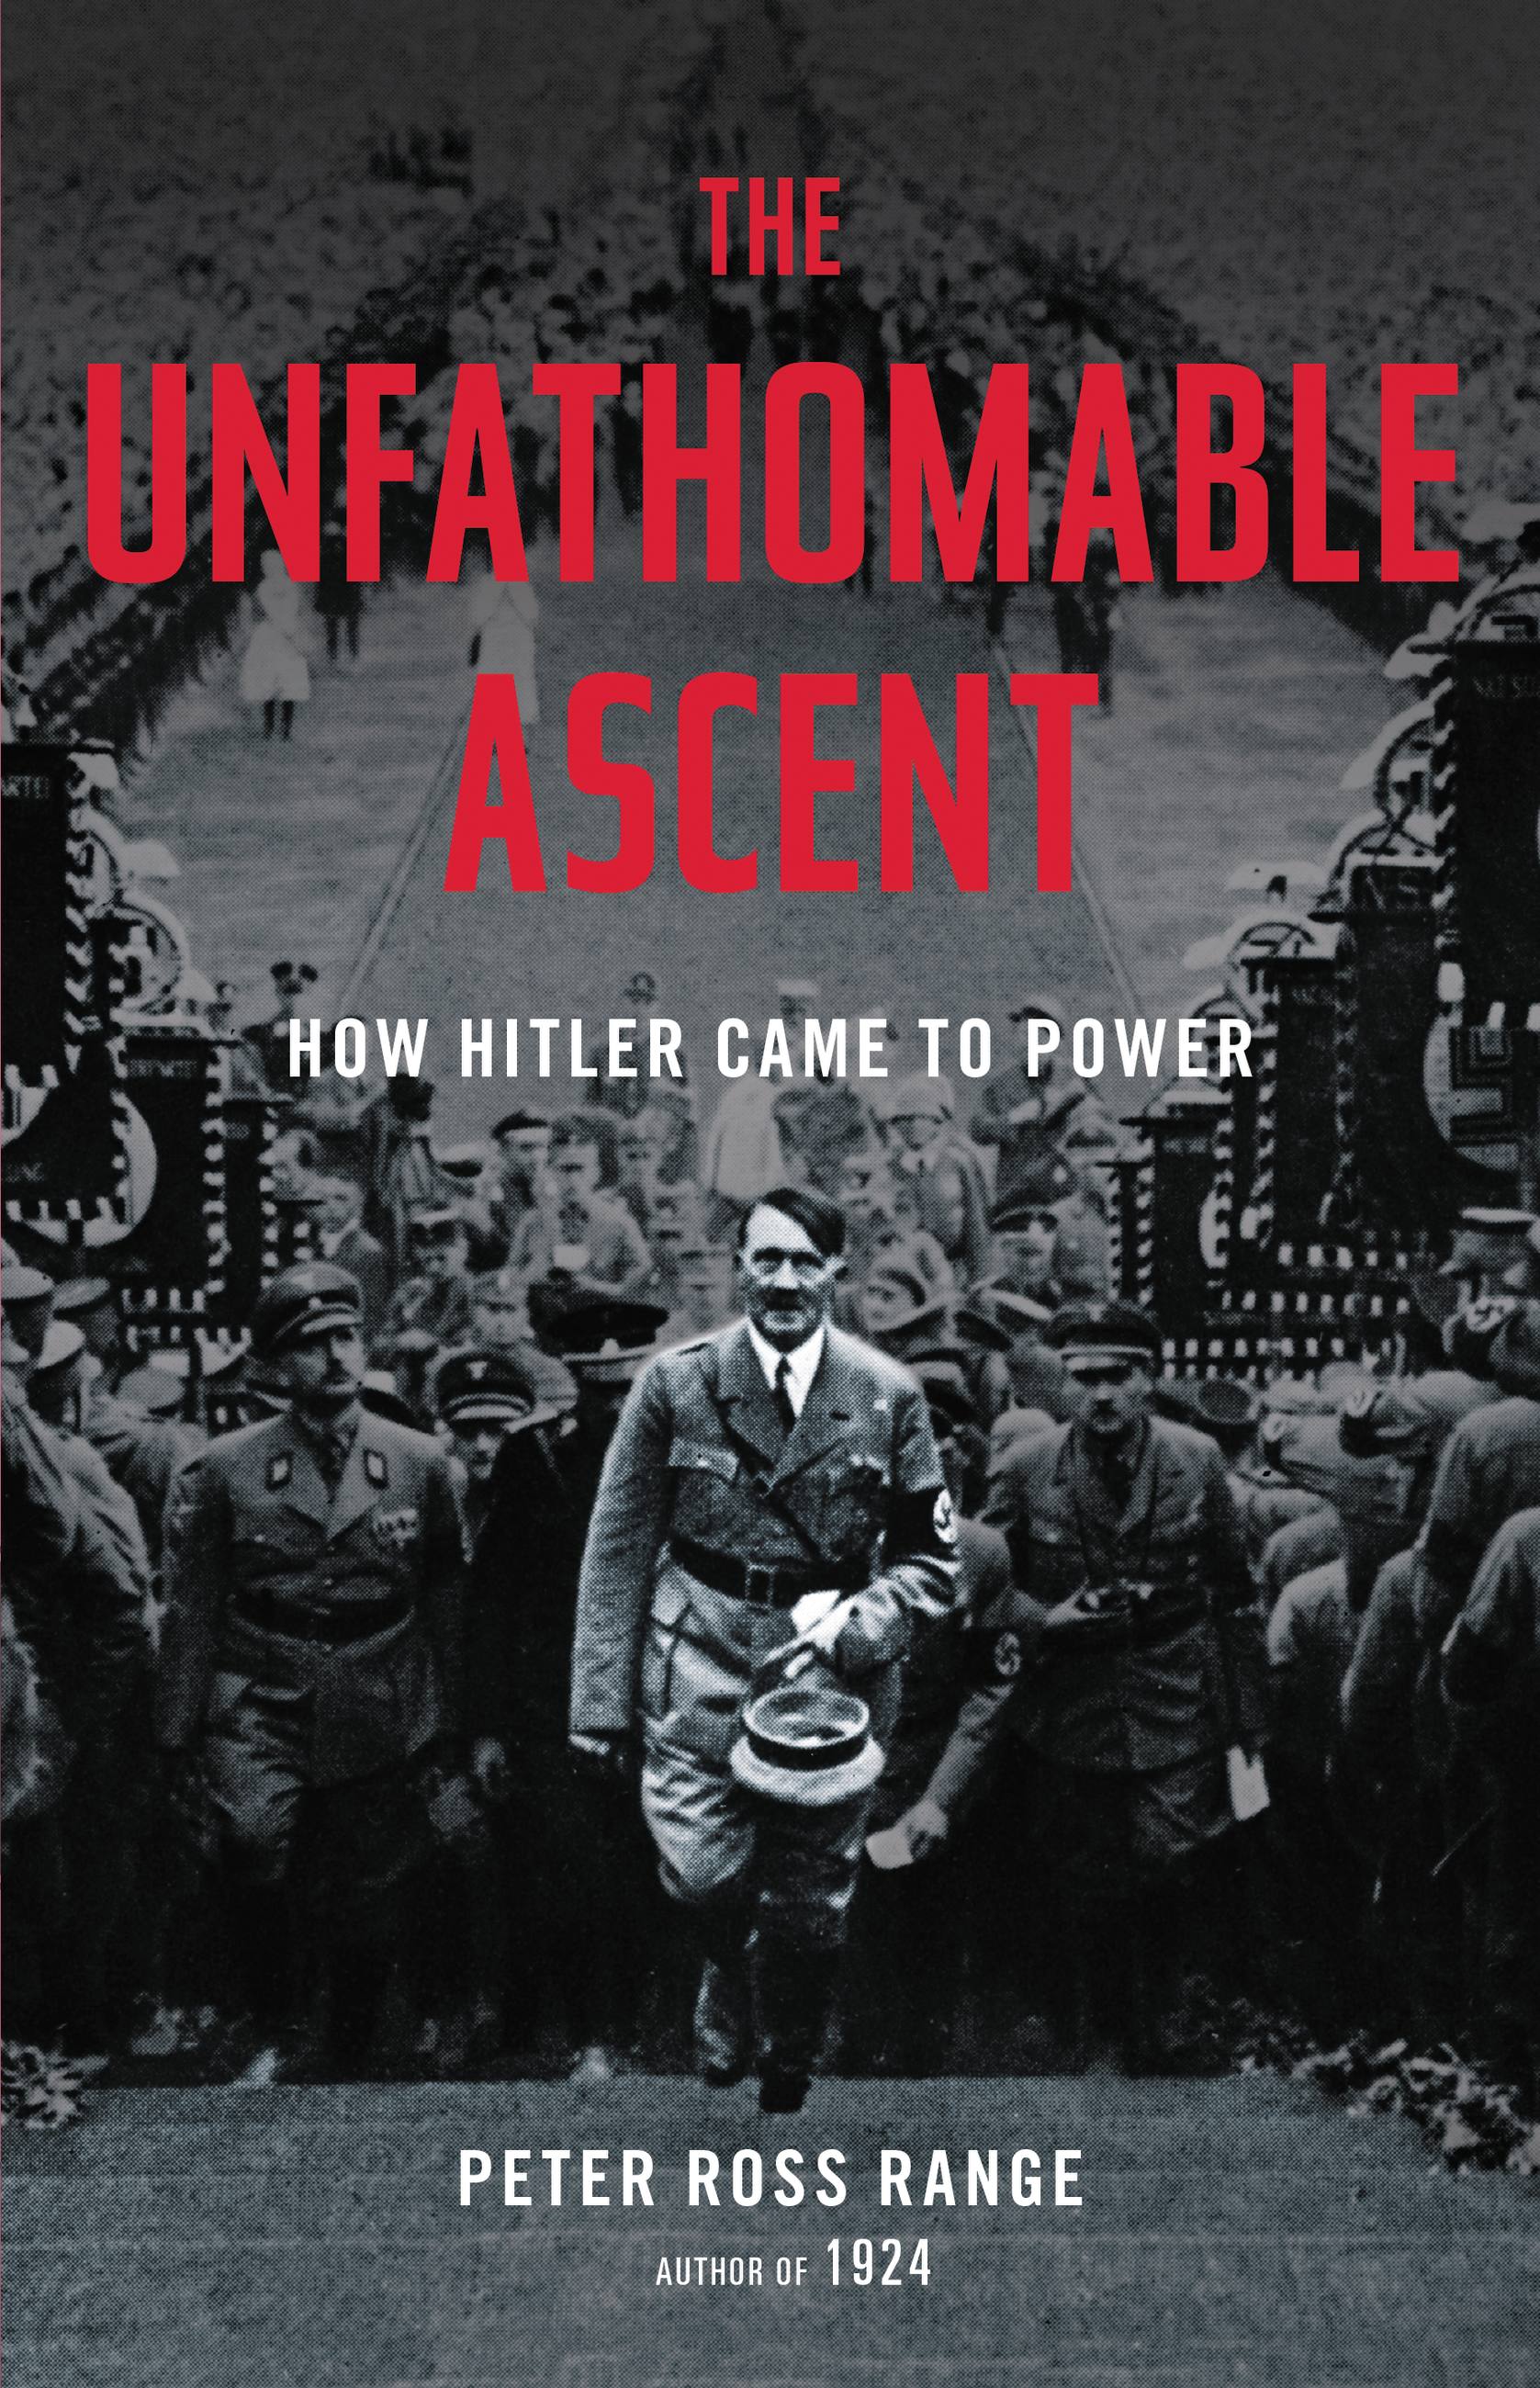 Mein Kampf: My Struggle de Adolf Hitler ‒ Livres audio sur Google Play